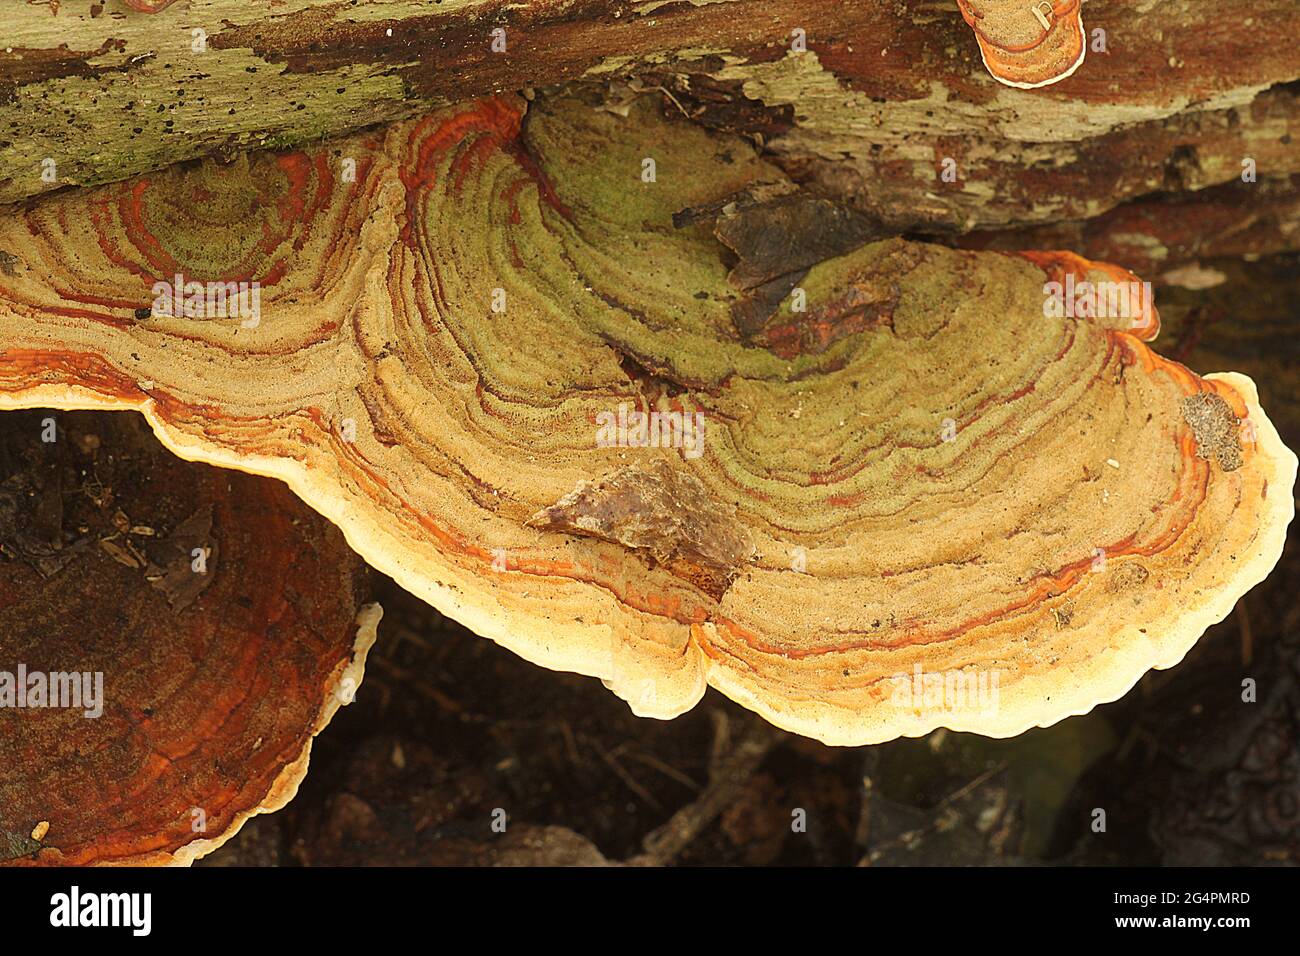 Turkey tail bracket fungus (Stereum versicolor) Stock Photo